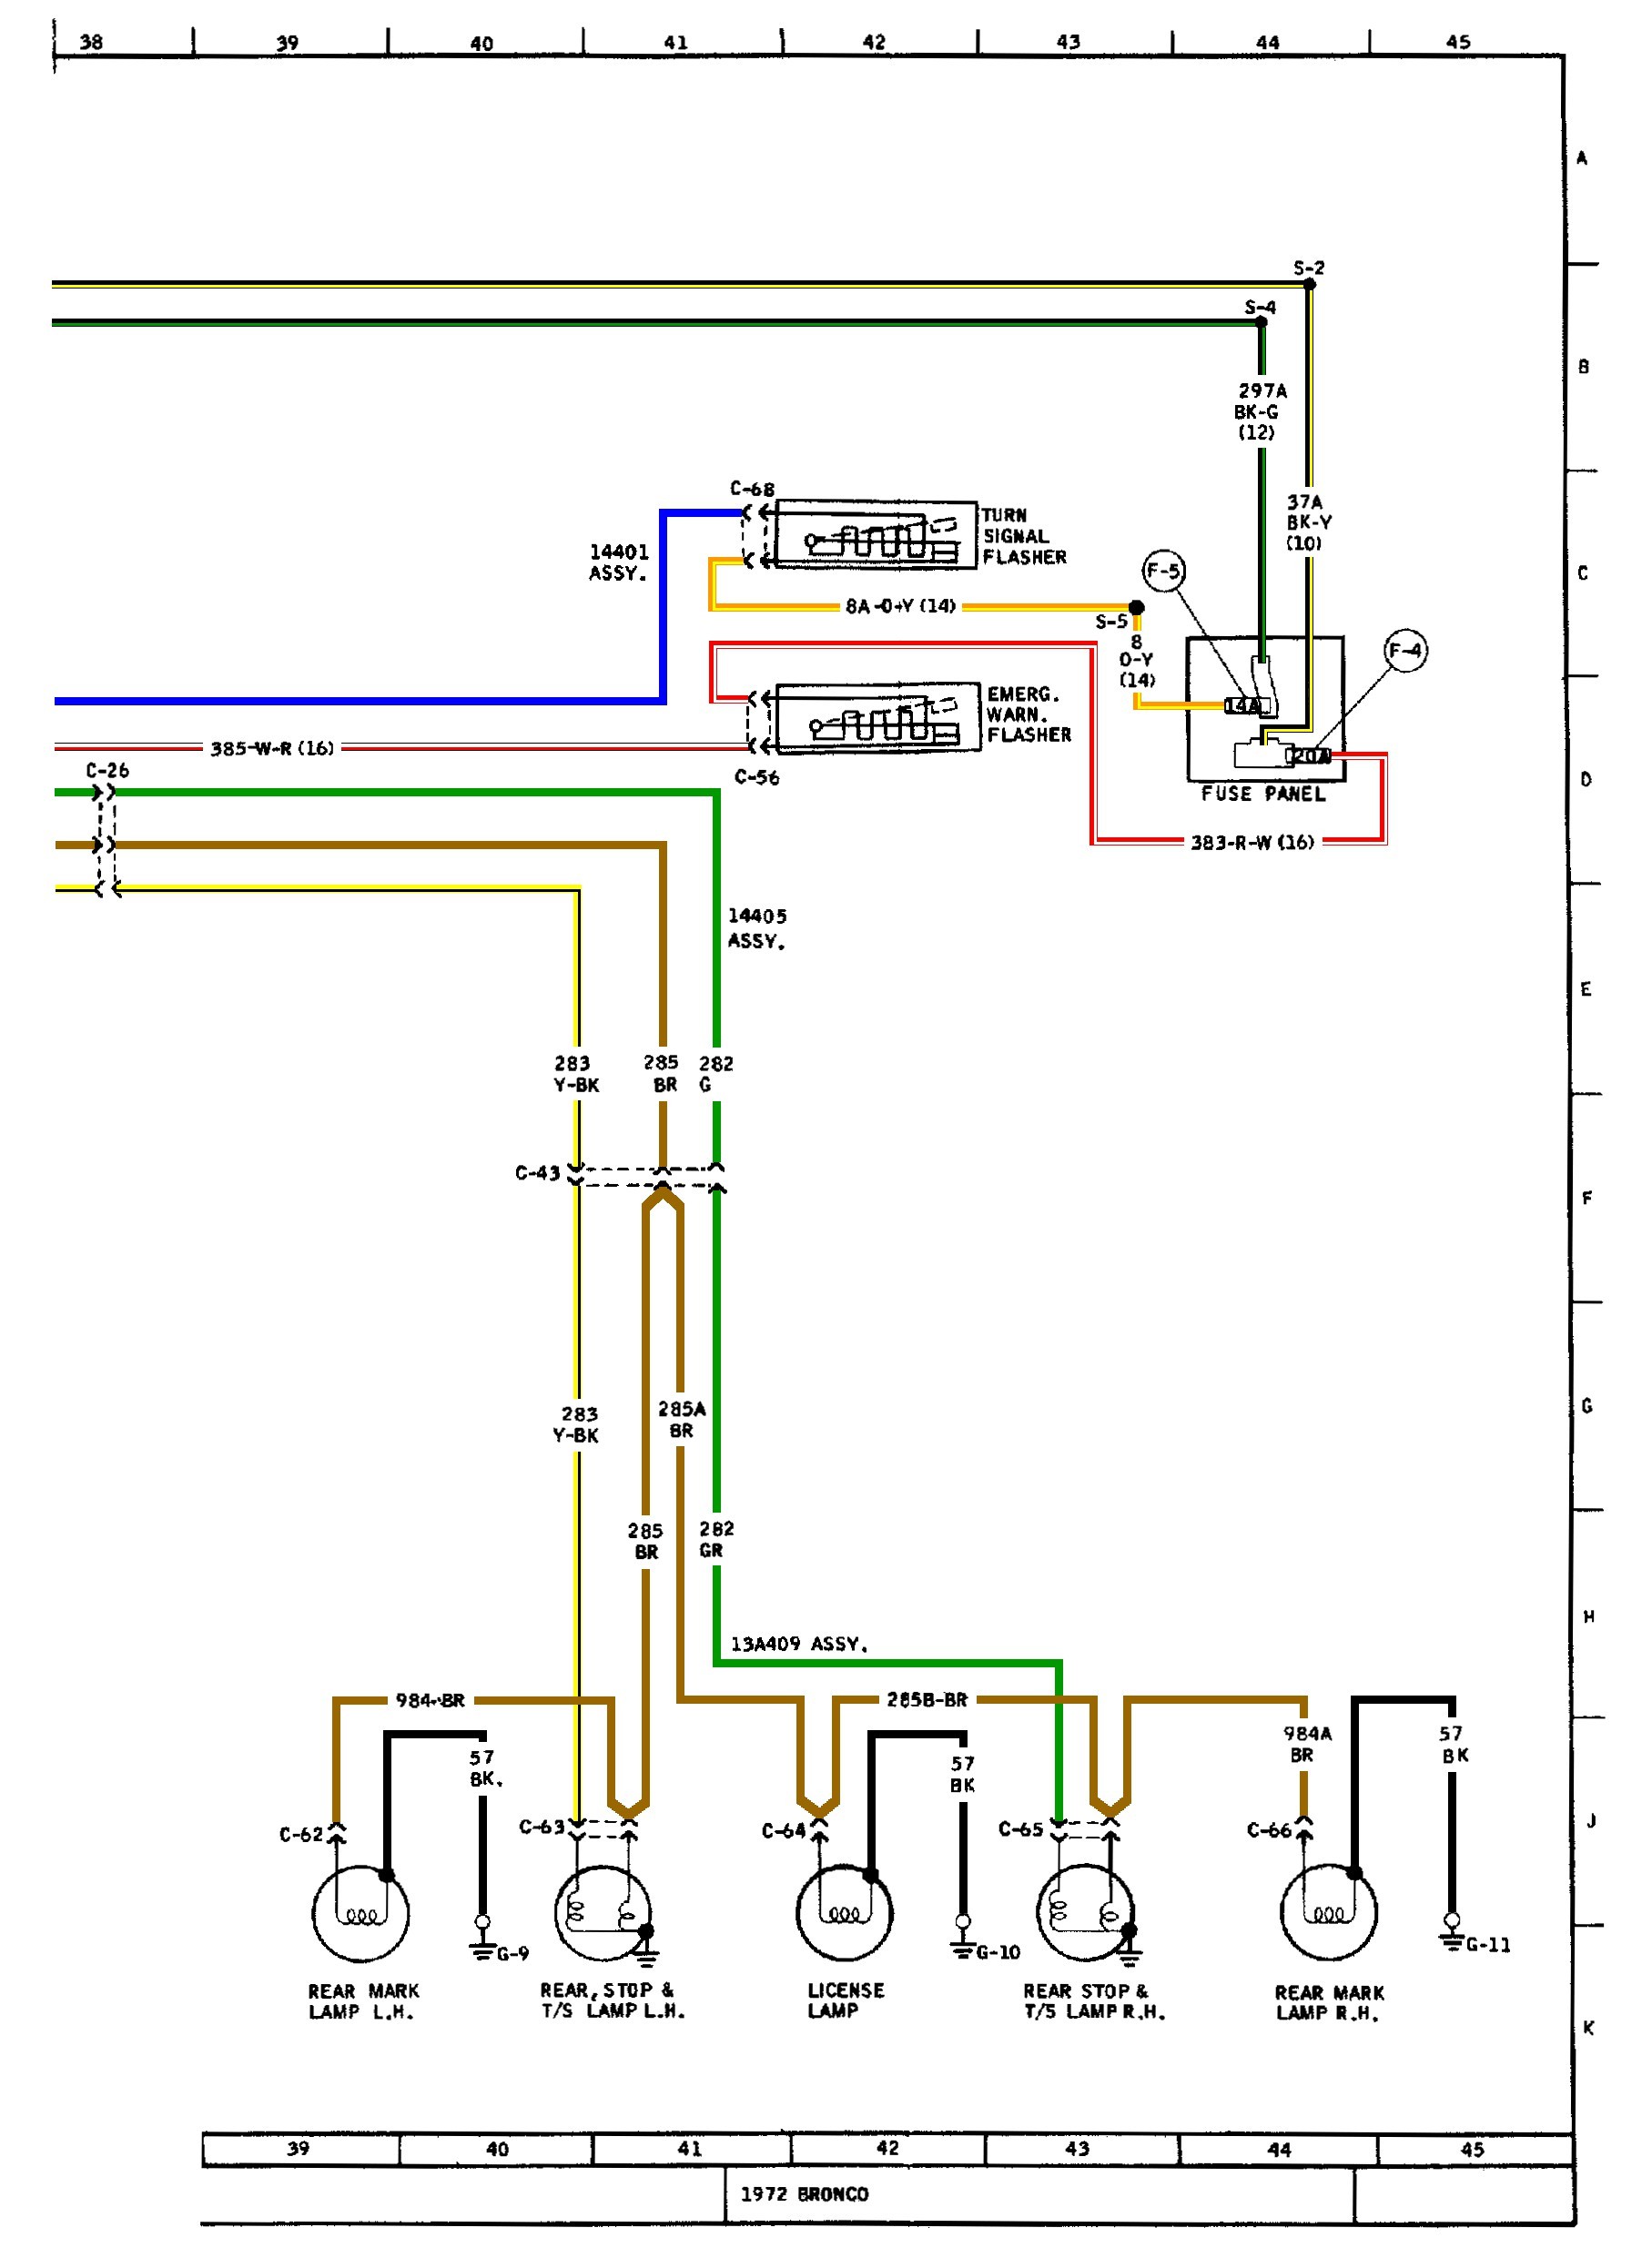 ke light turn signal wiring diagram ke free wiring diagrams Wiring diagram